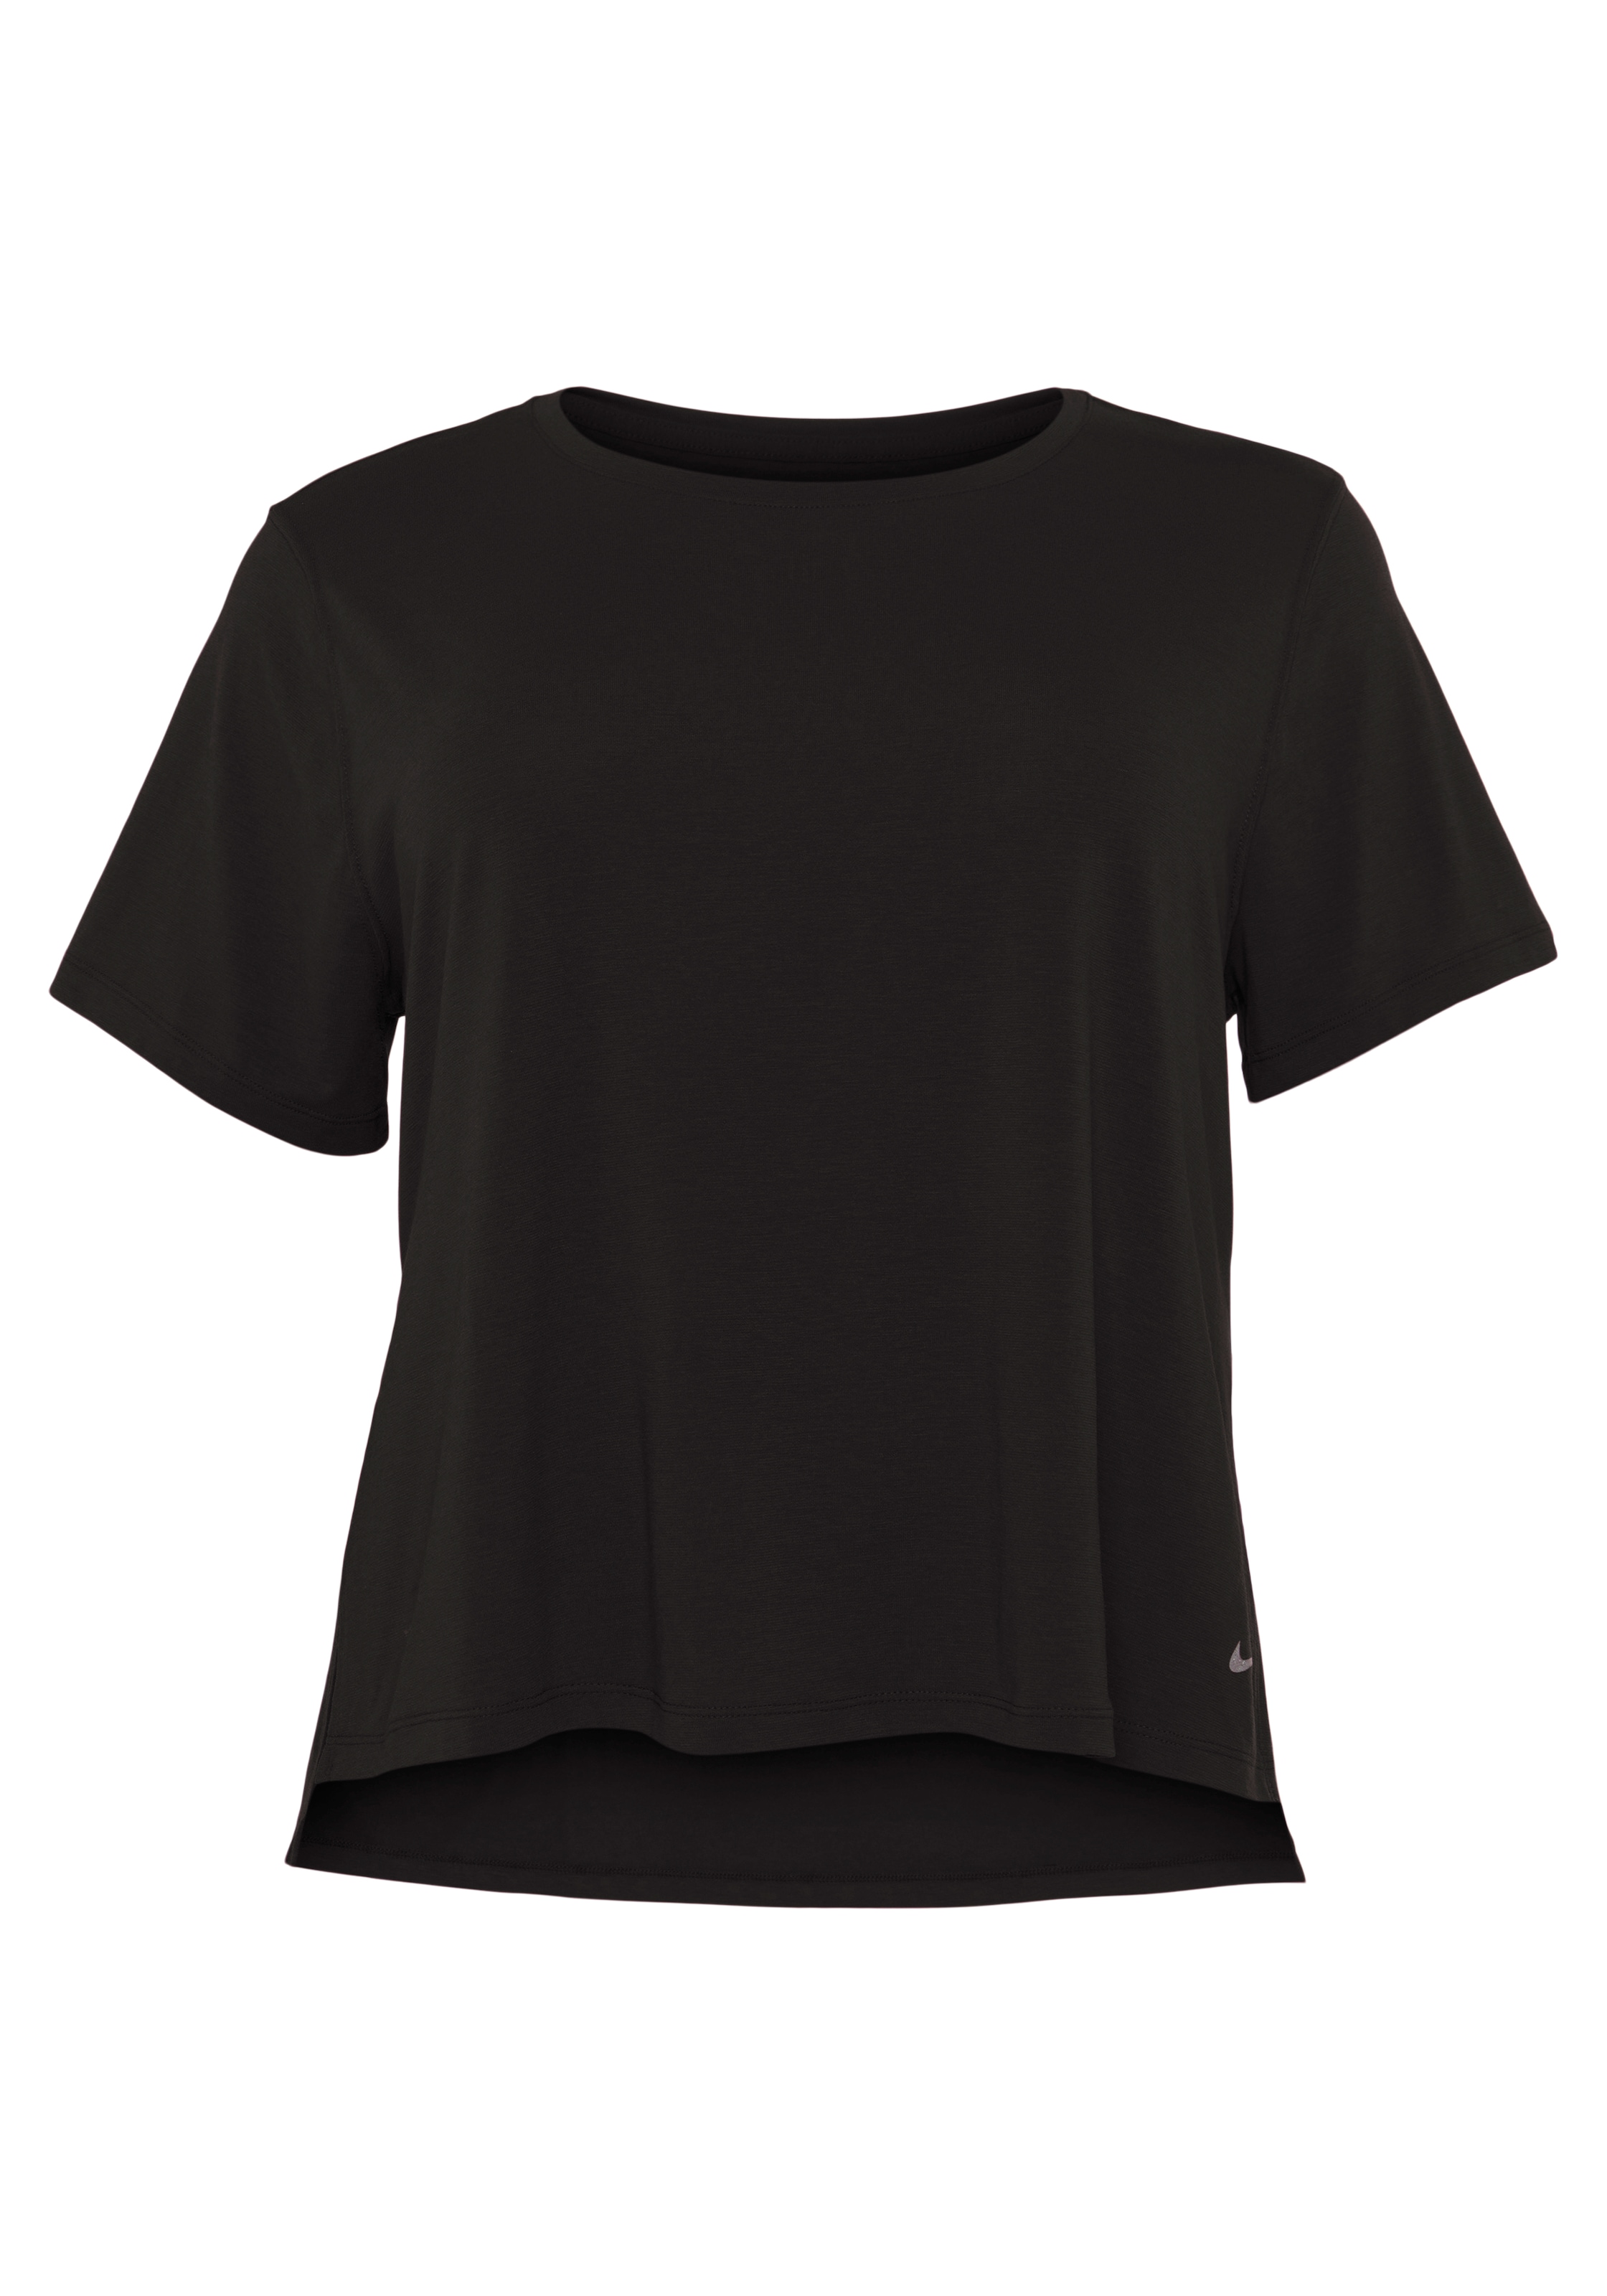 Nike Yogashirt »Yoga Dri-FIT Women's Top (Plus Size)«